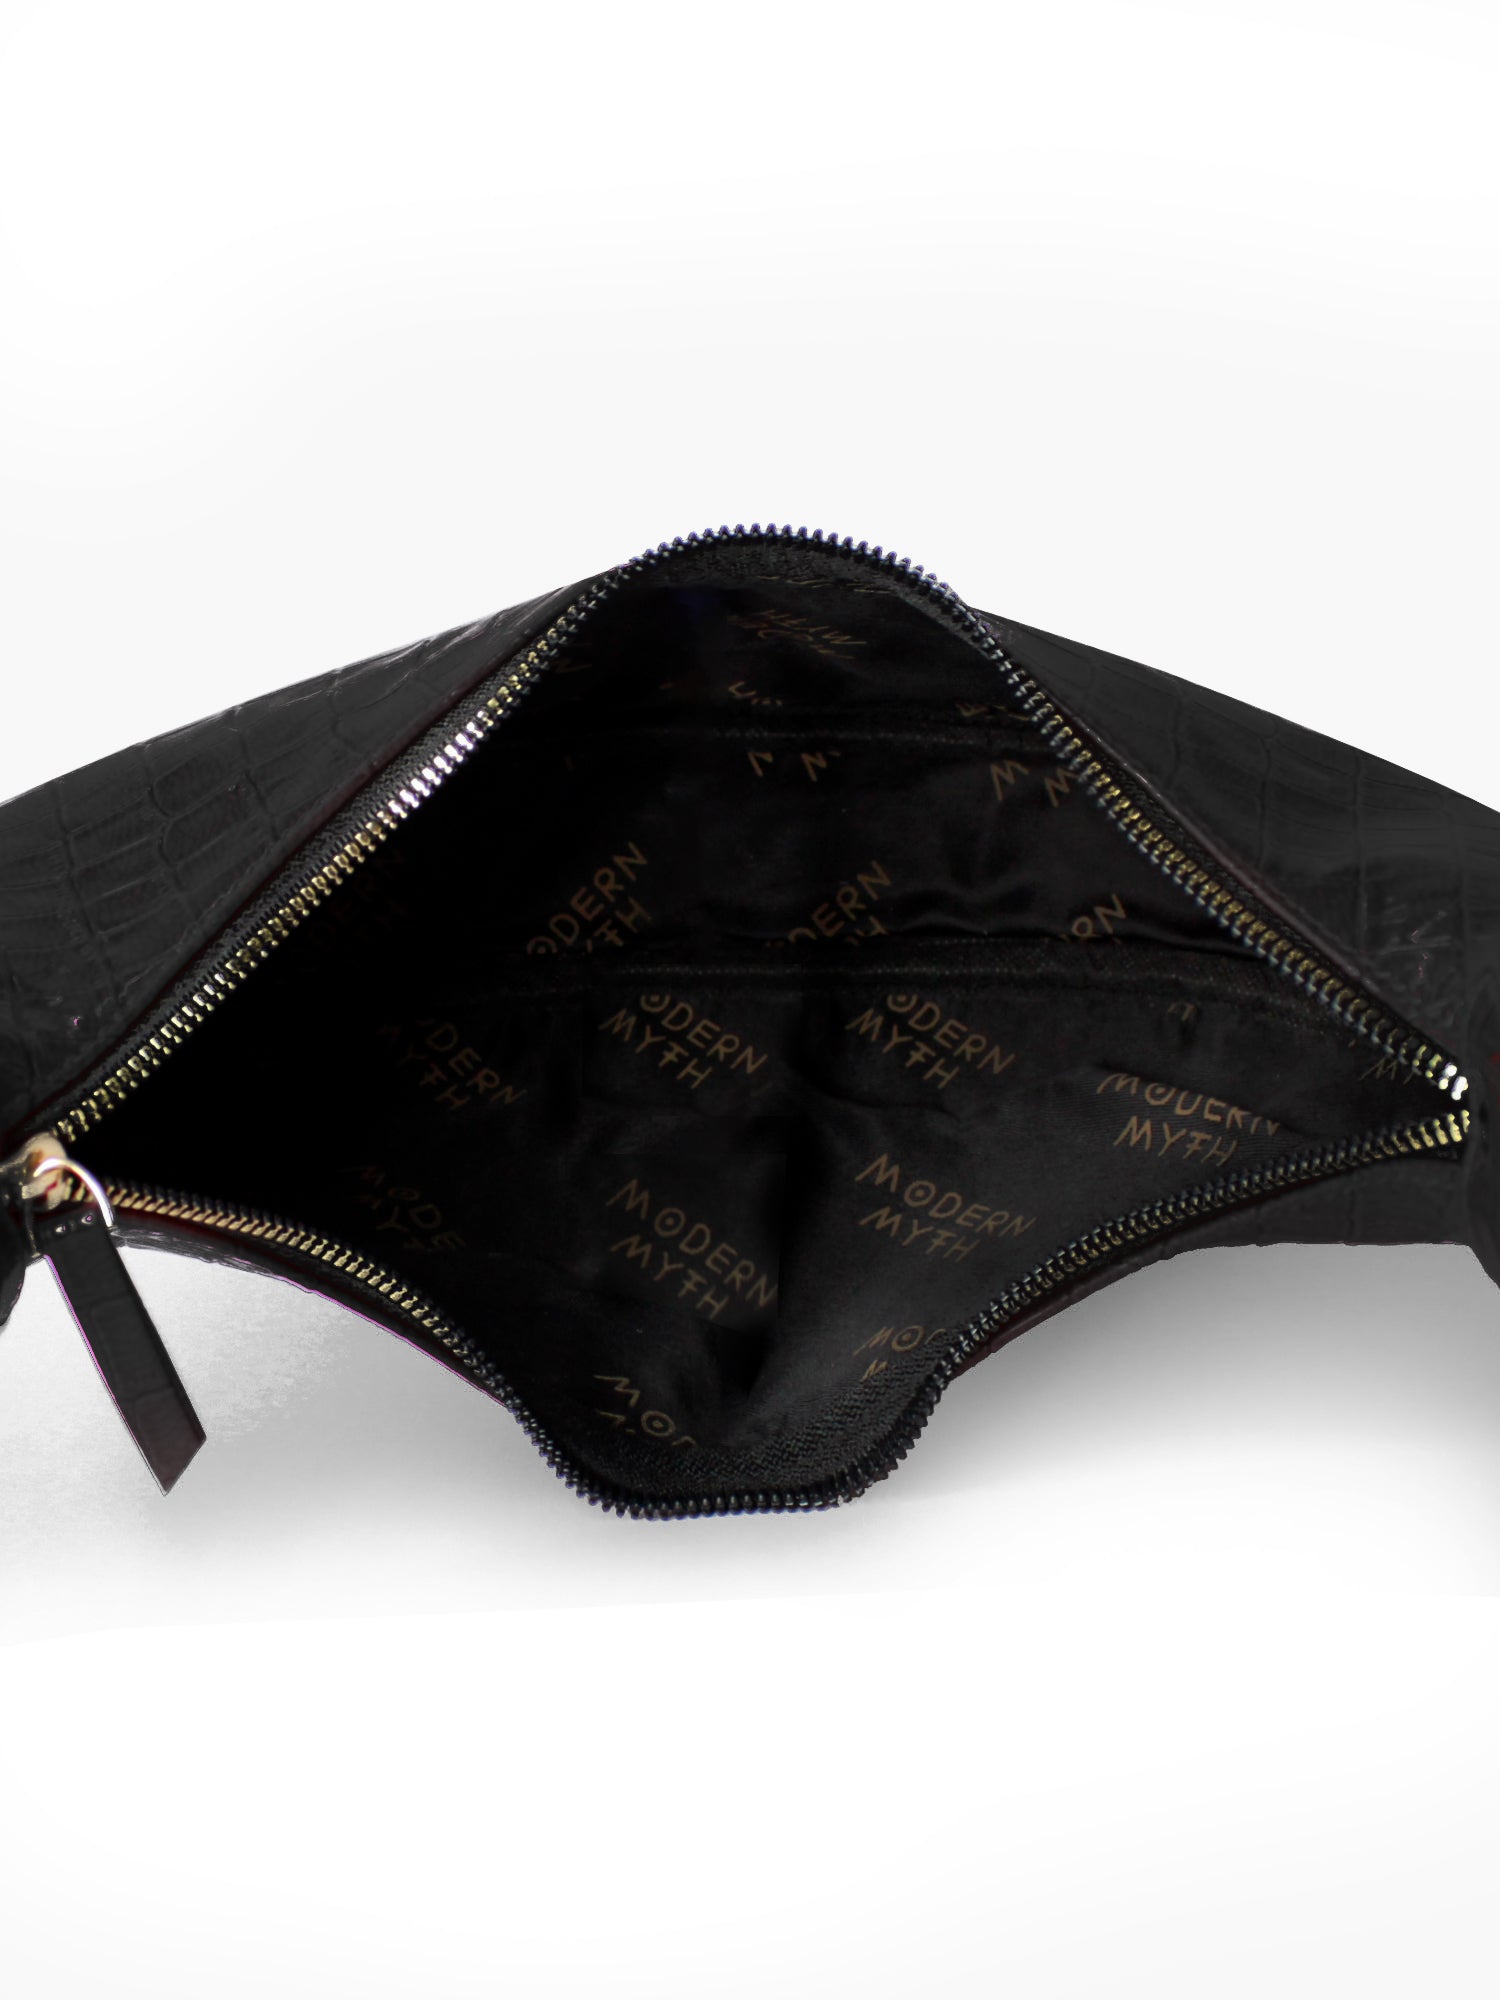 Rare Moynat Gaby PM Leather Tote Bag Shoulder Hand Bag Black Used